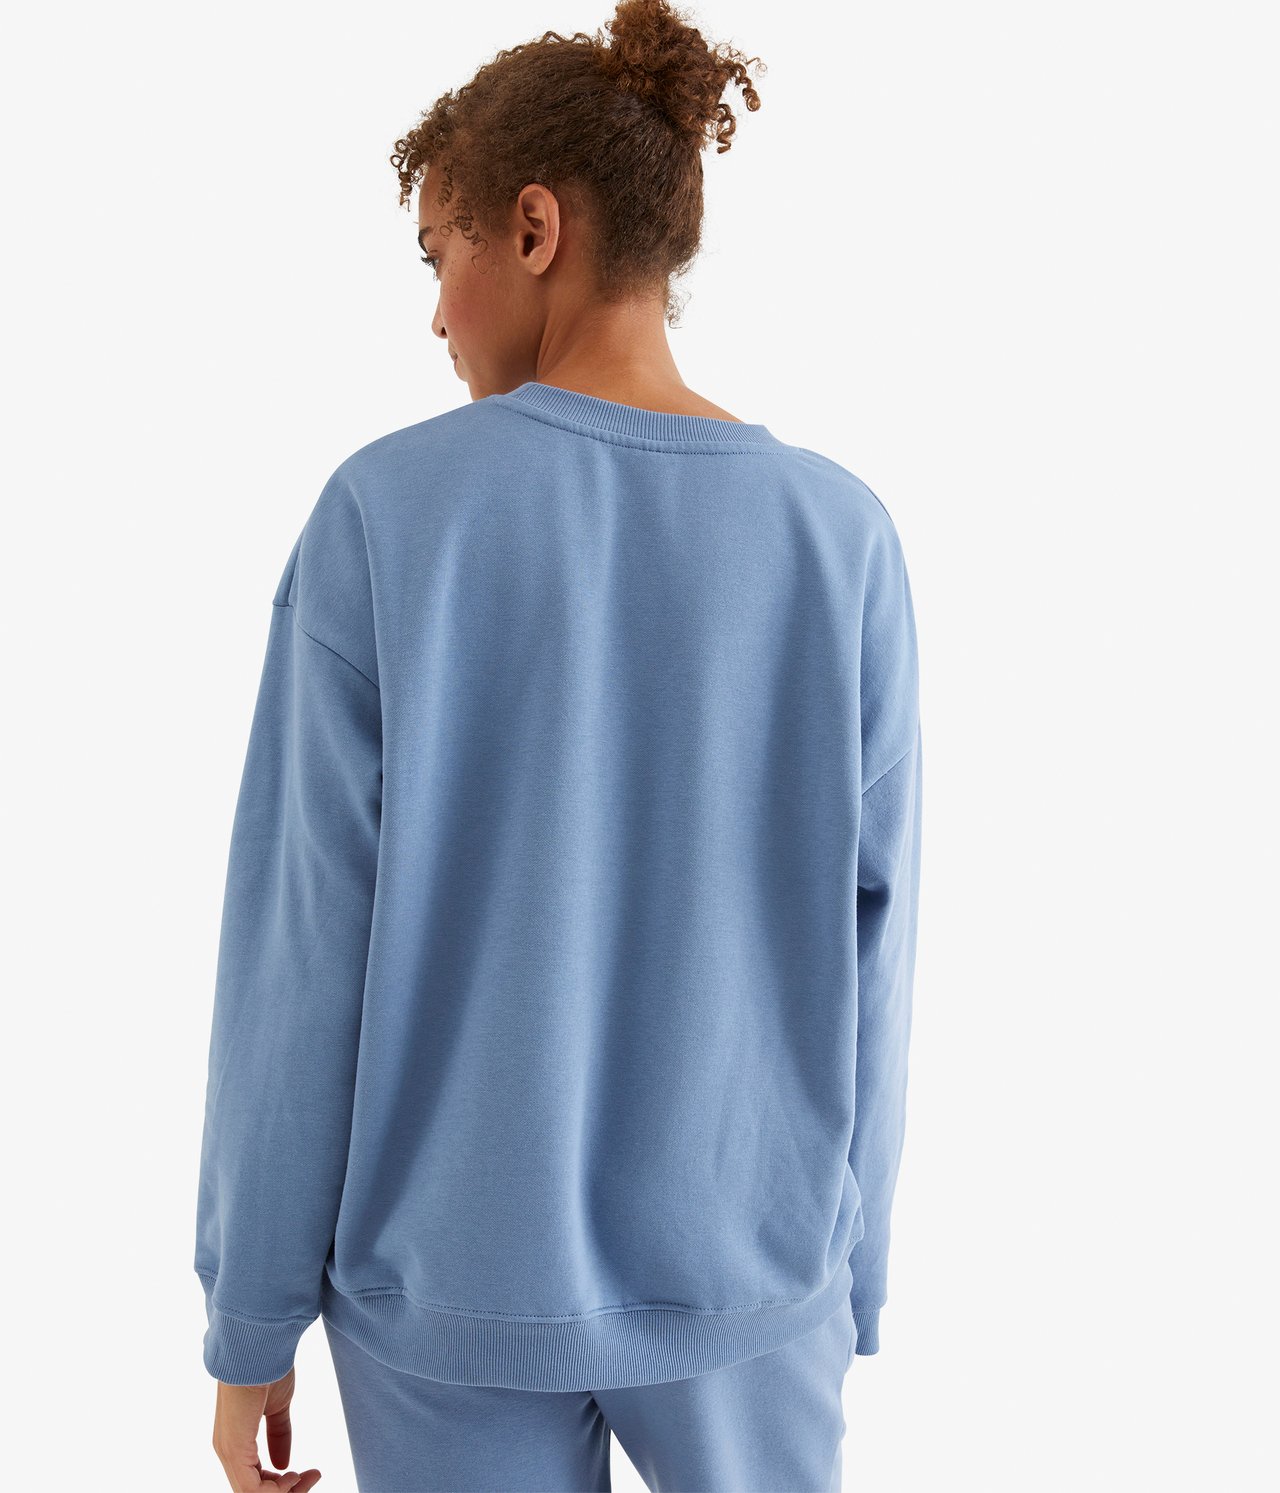 Sweatshirt med tryck Blå - XS - 2